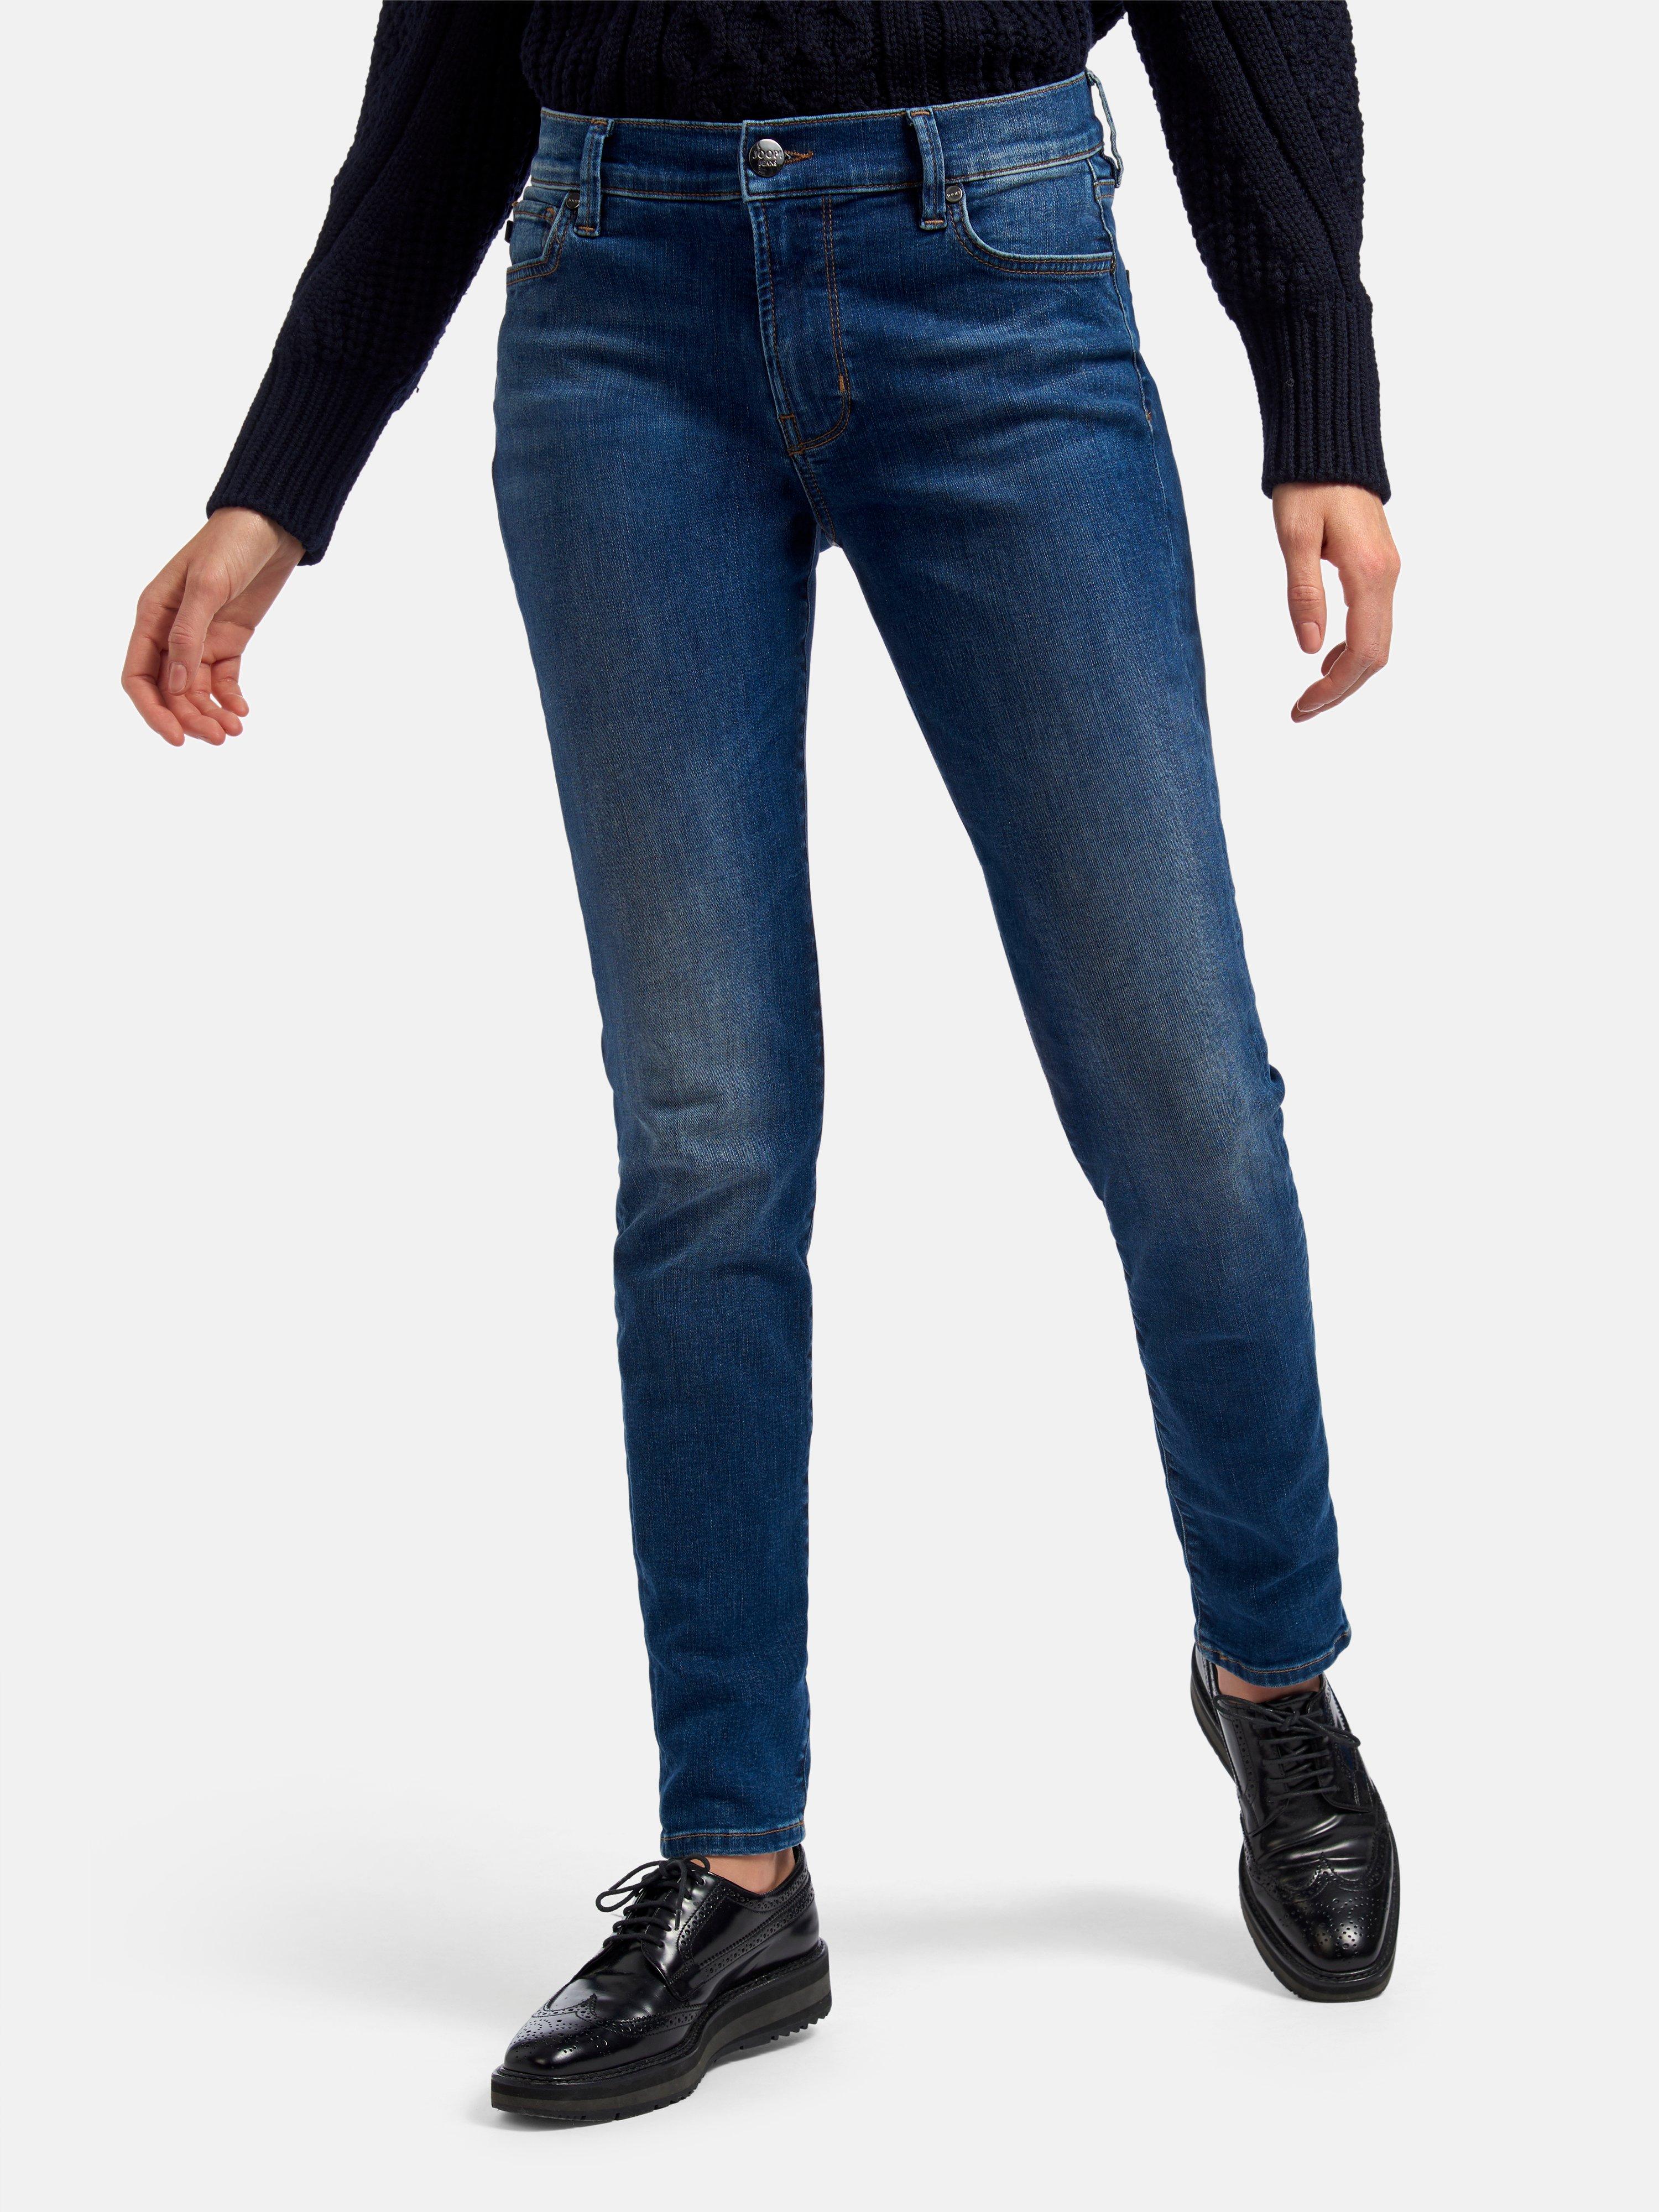 Joop! - Ankle-length Slim blue jeans - denim Fit